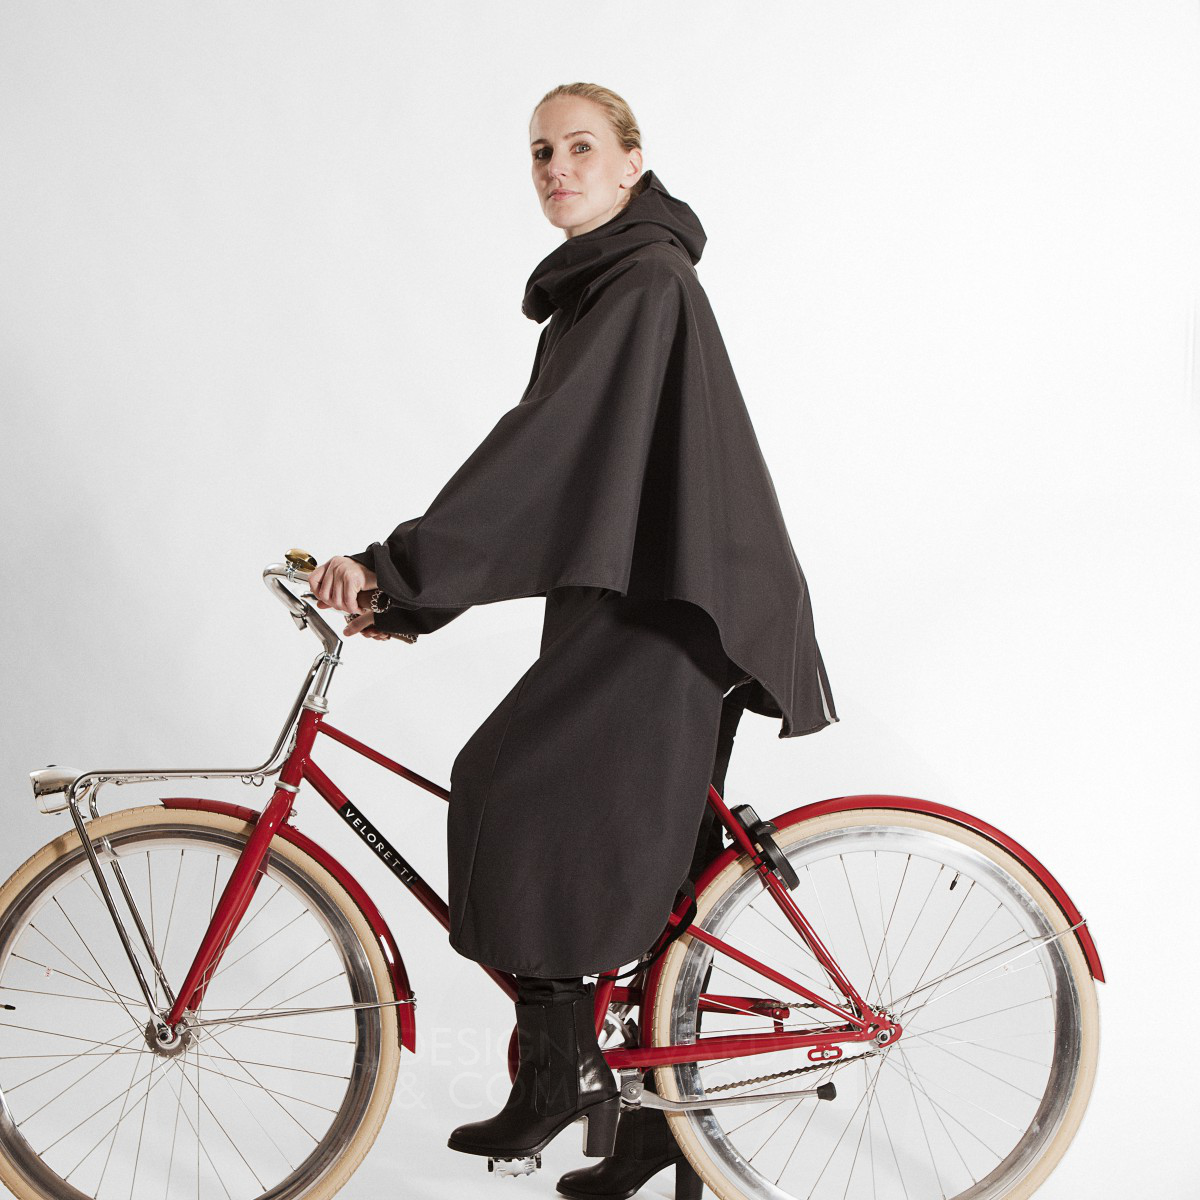 The Rain Dress Urban Cycling Rainwear by Melanie Brown